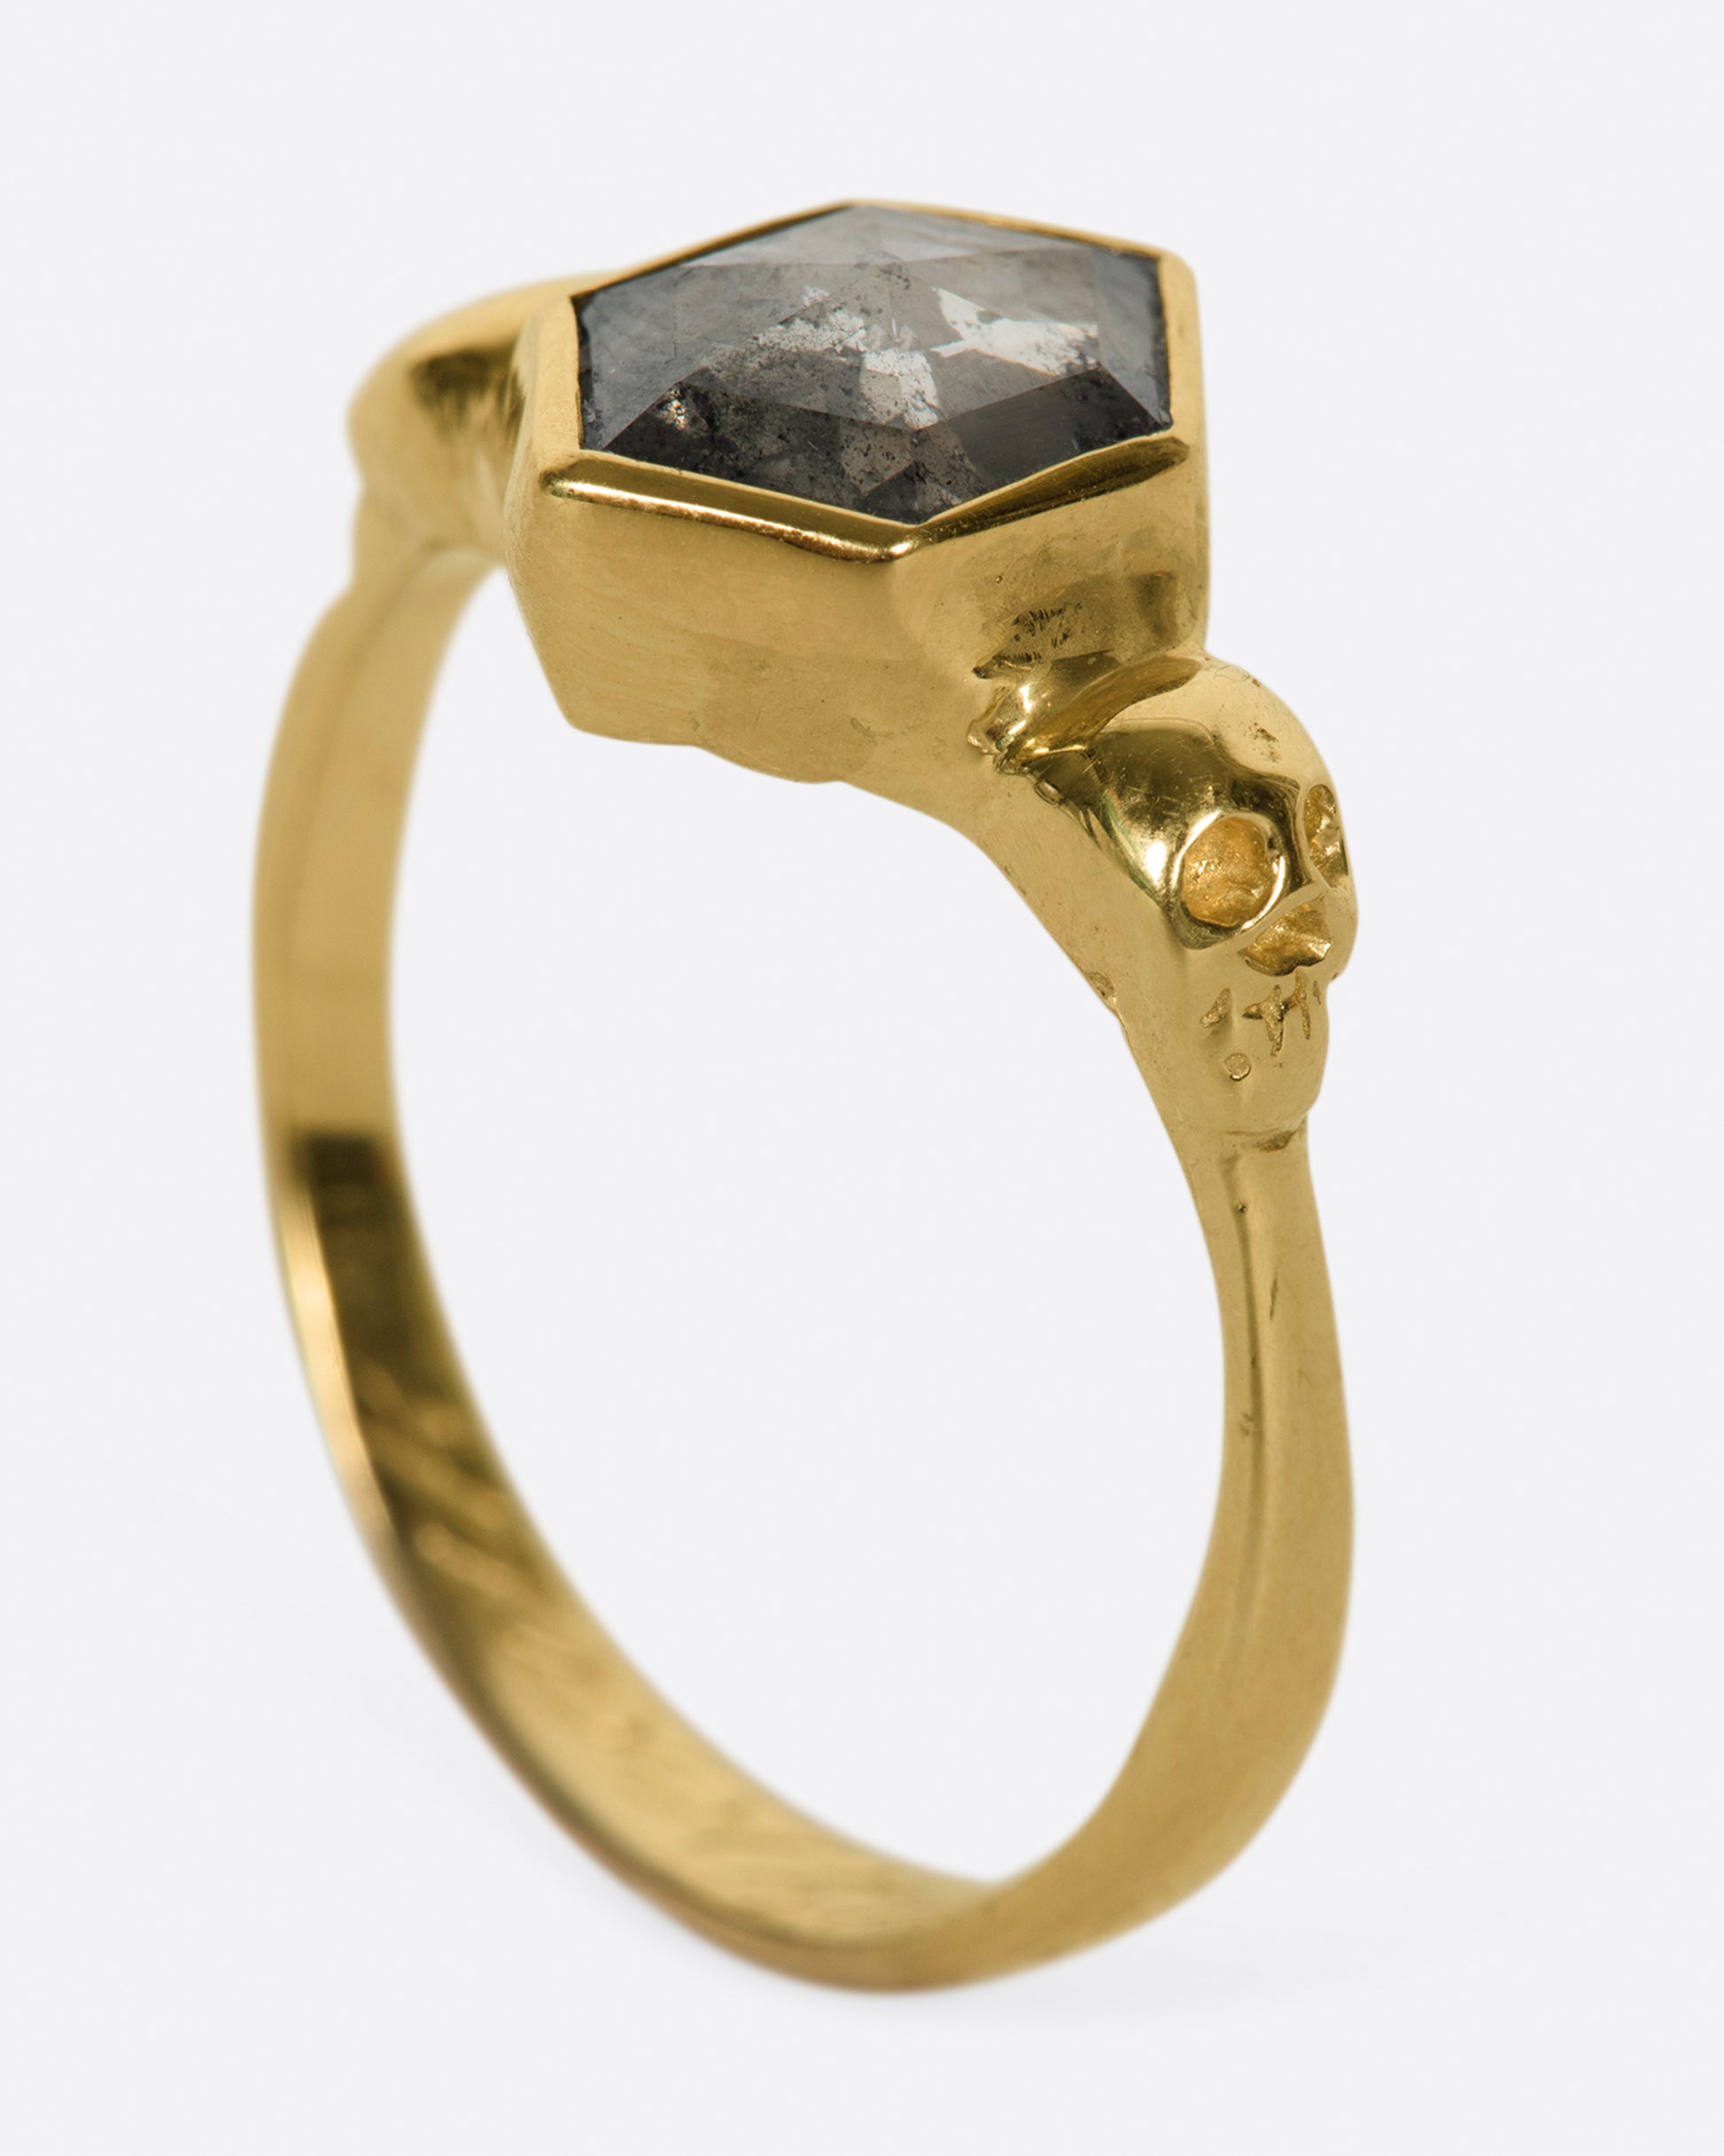 A bezel set, hexagonal, salt & pepper diamond ring with skulls on either side.